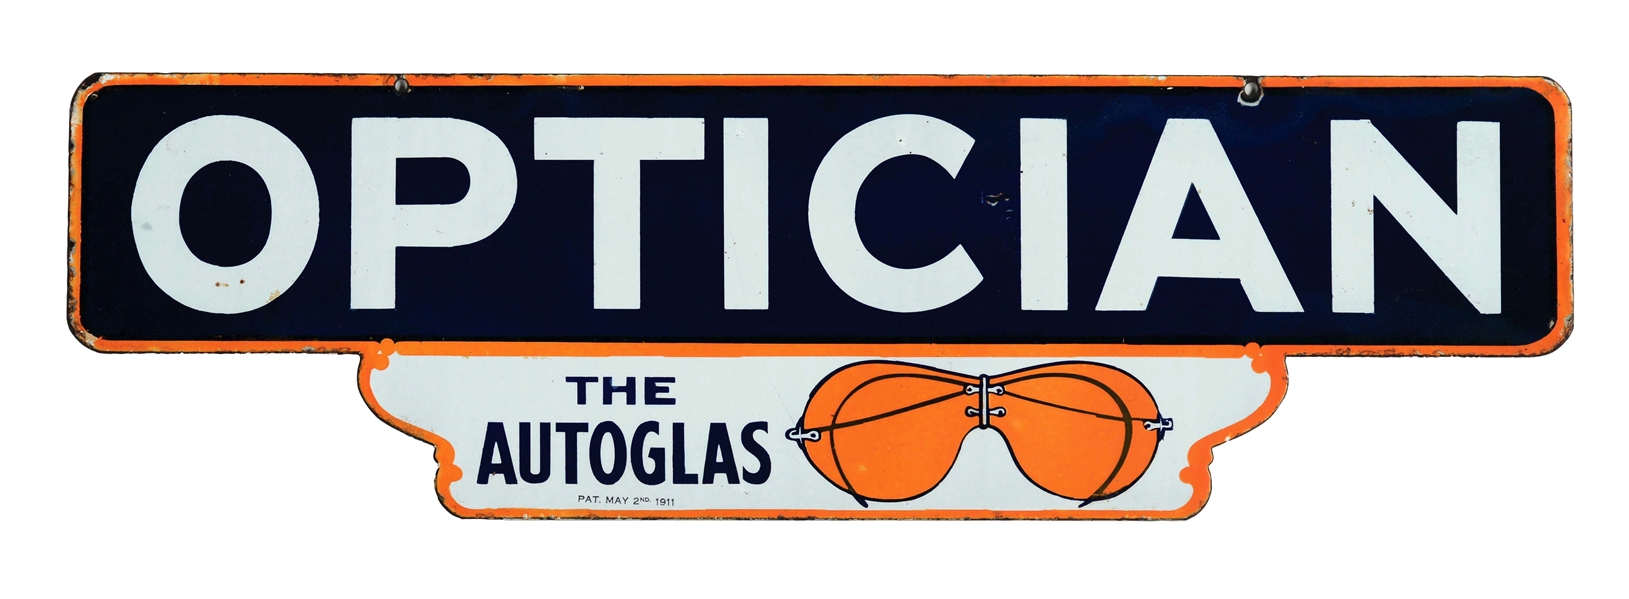 OPTICIAN DIE-CUT PORCELAIN SIGN WITH AUTOGLAS GLASSES GRAPHIC.